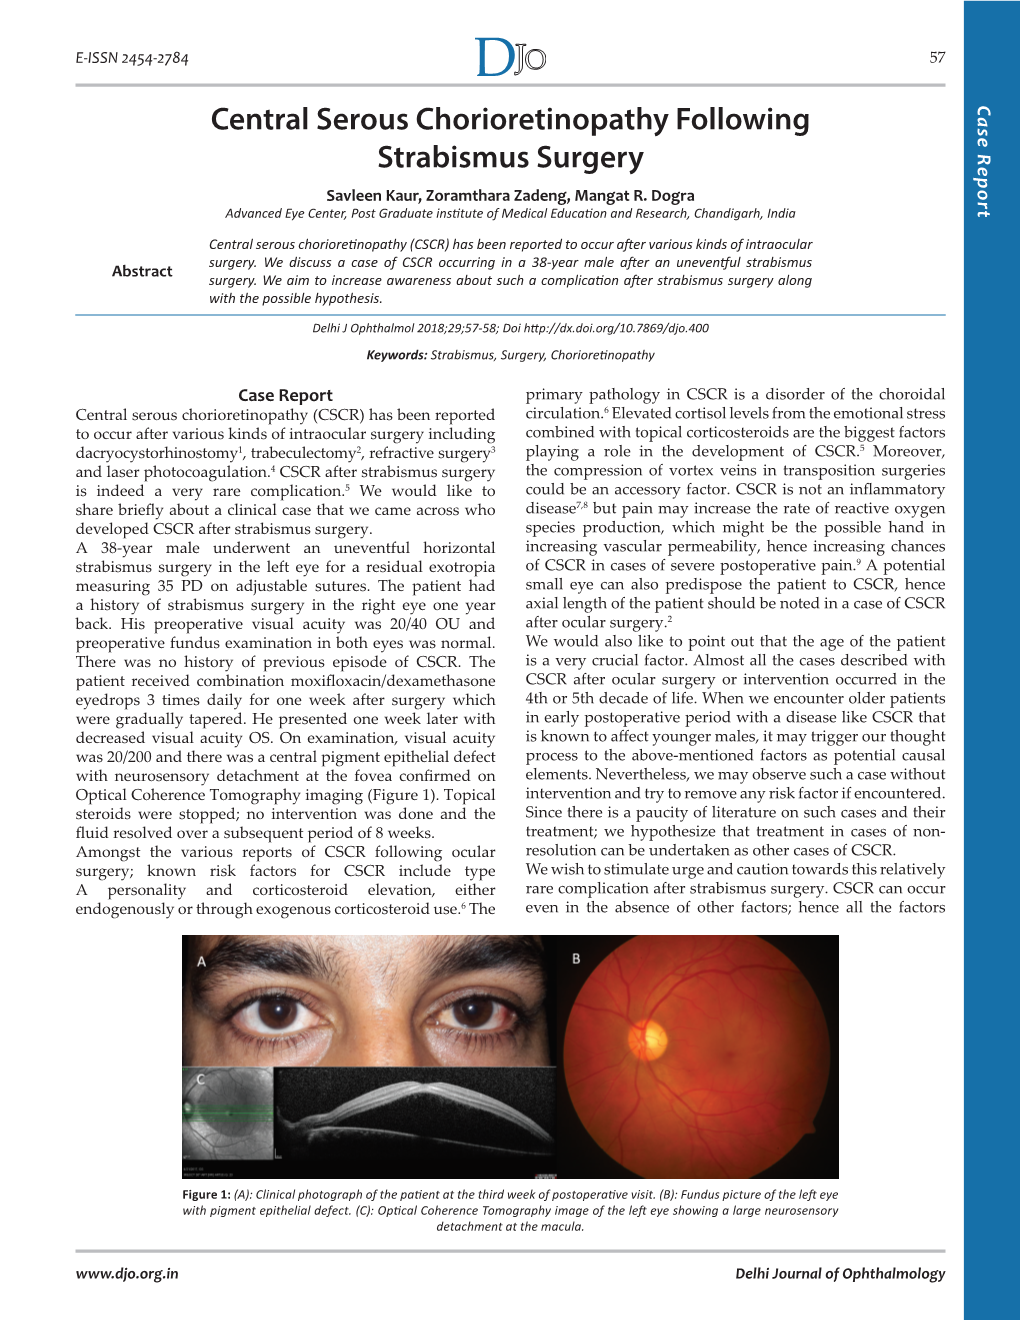 Central Serous Chorioretinopathy Following Strabismus Surgery